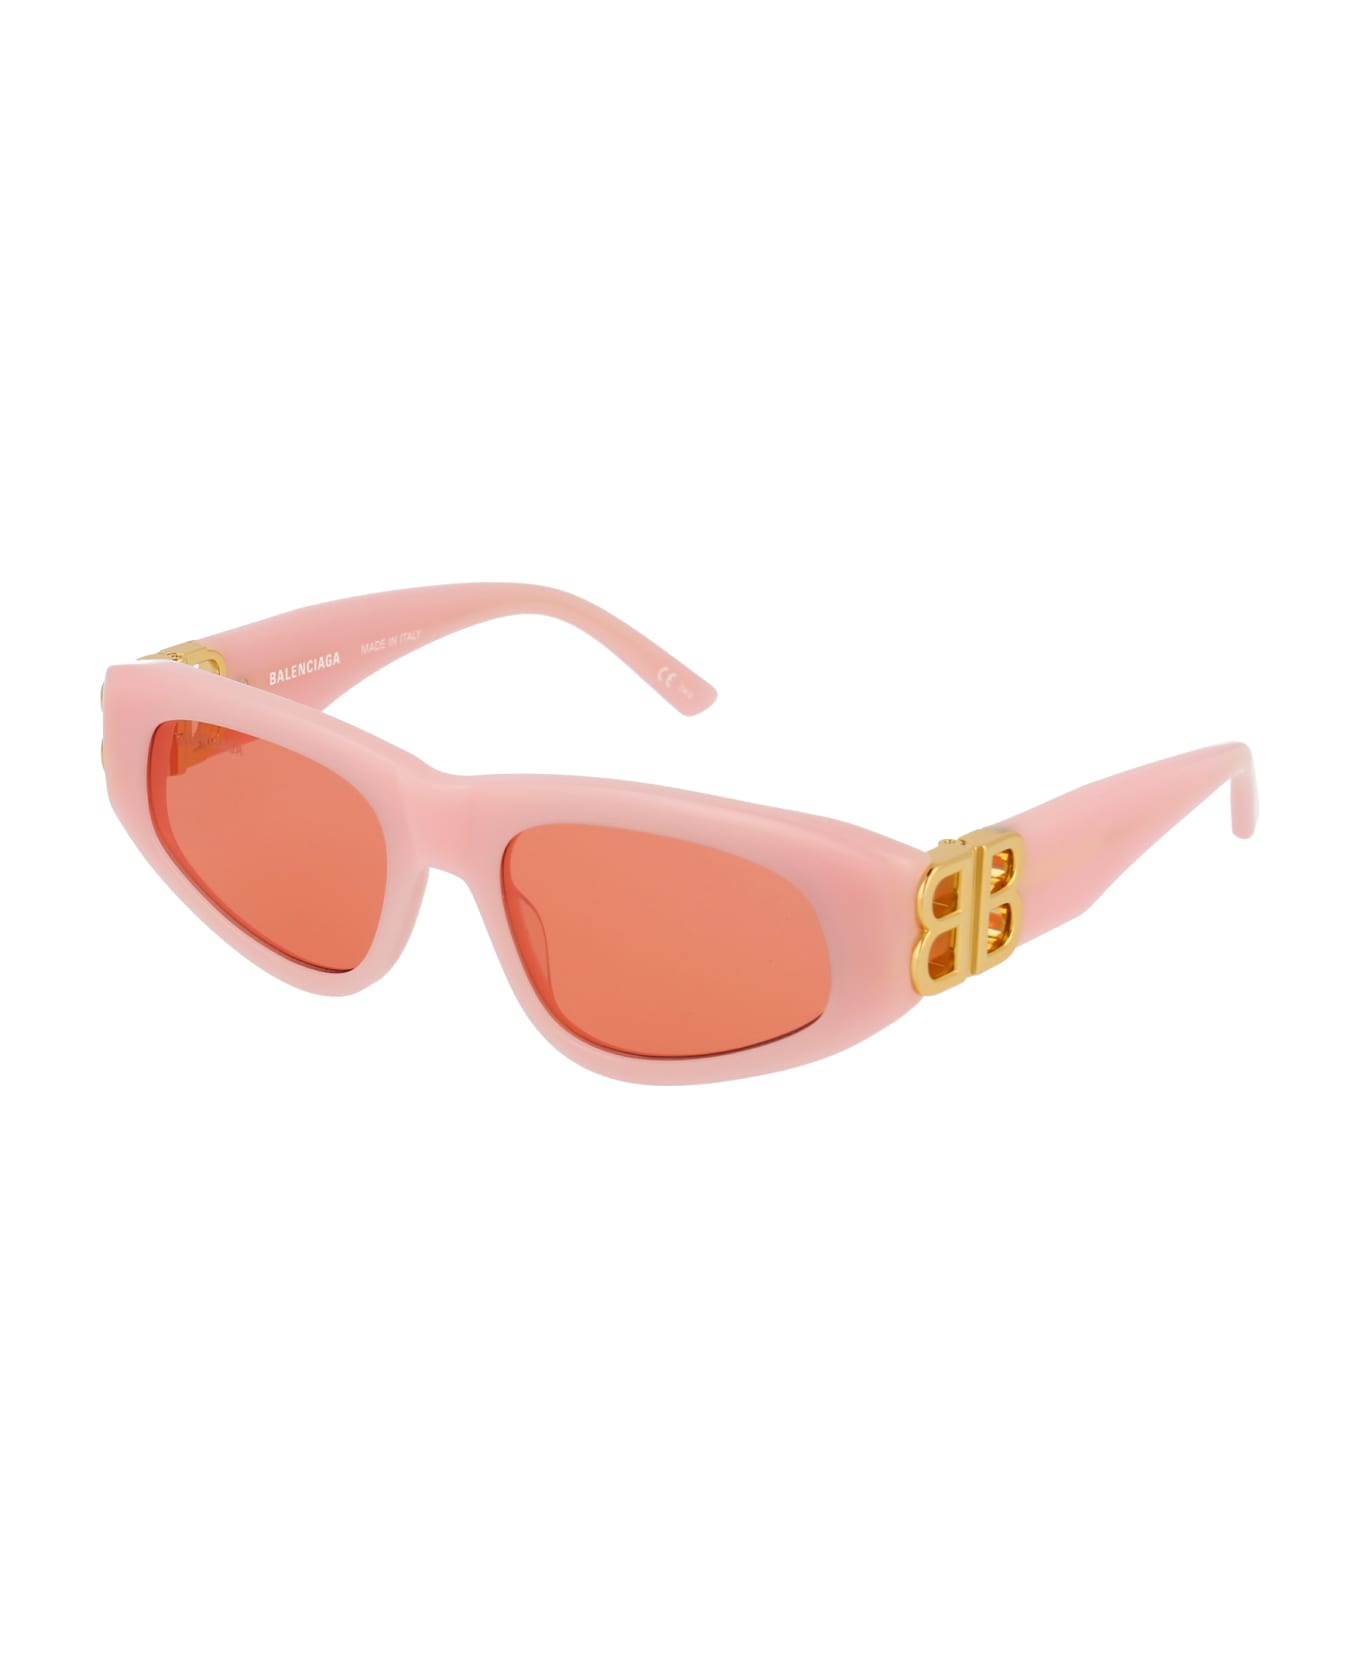 Balenciaga Eyewear Bb0095s Sunglasses - 003 PINK GOLD RED サングラス